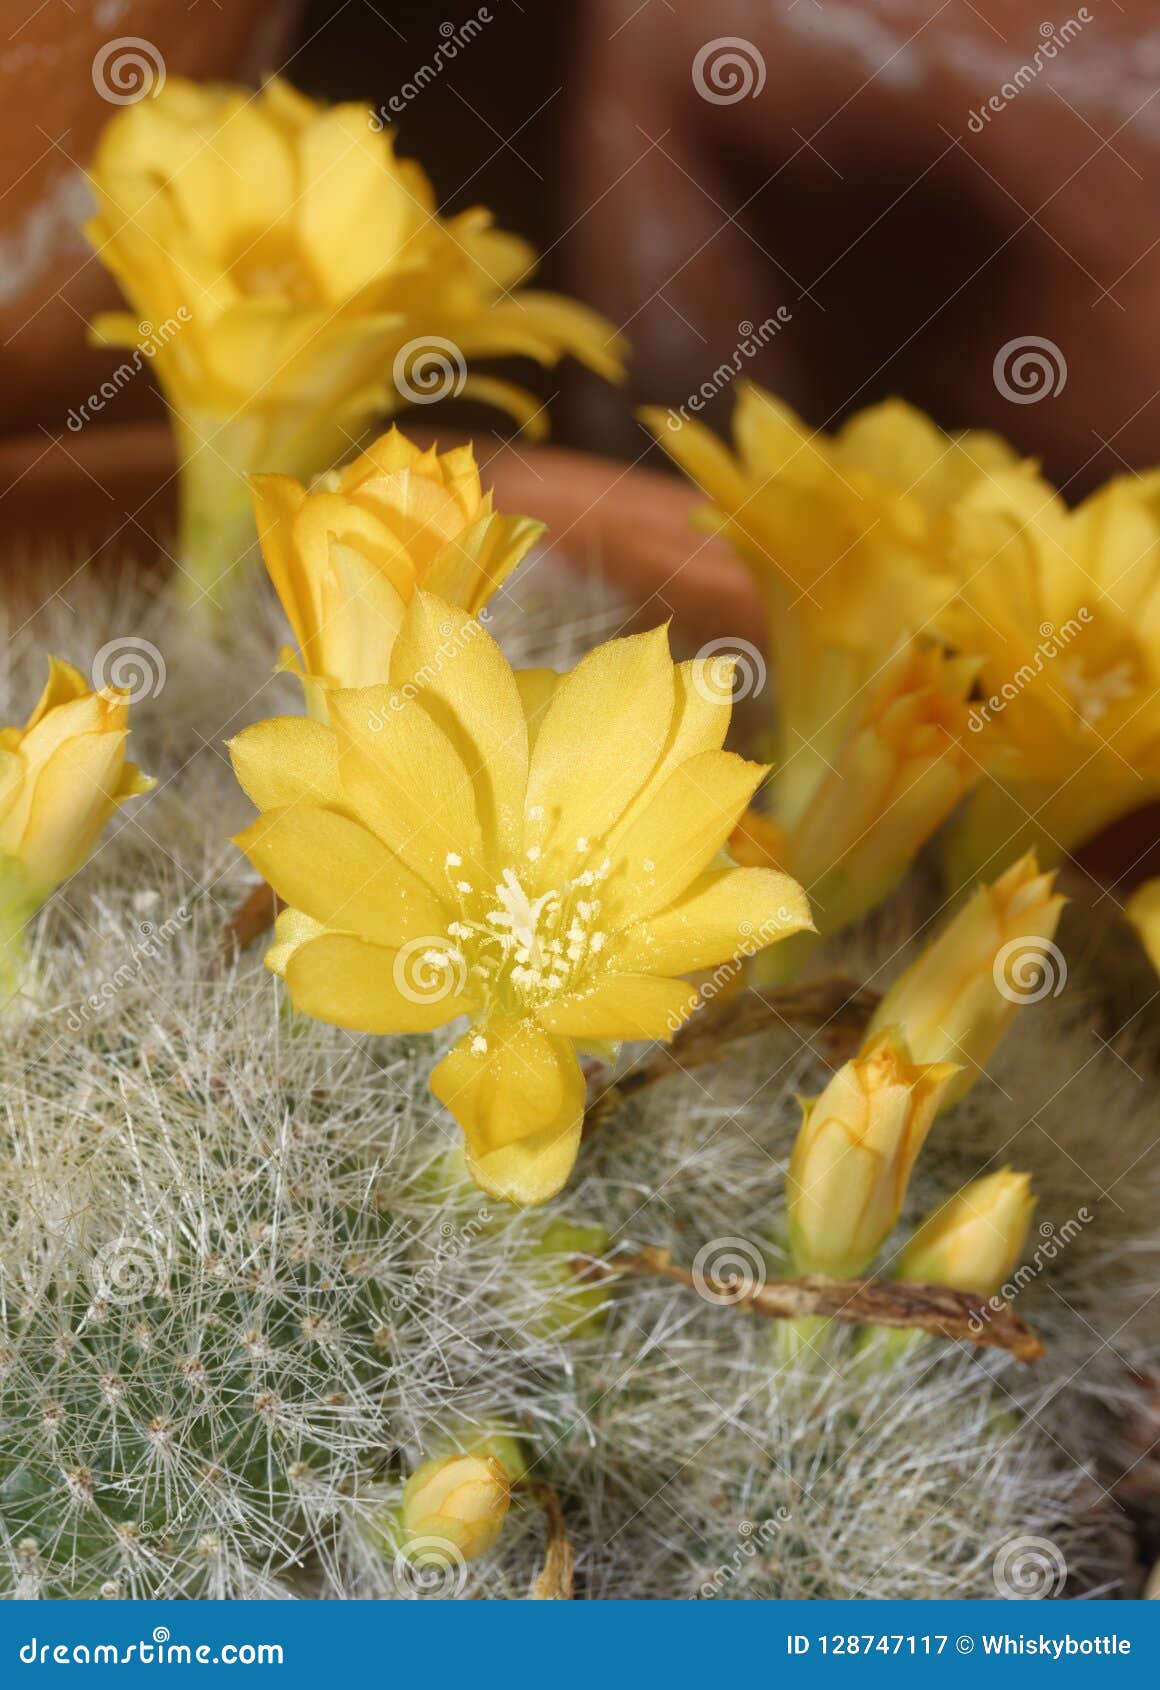 cactus - rebutia minuscula